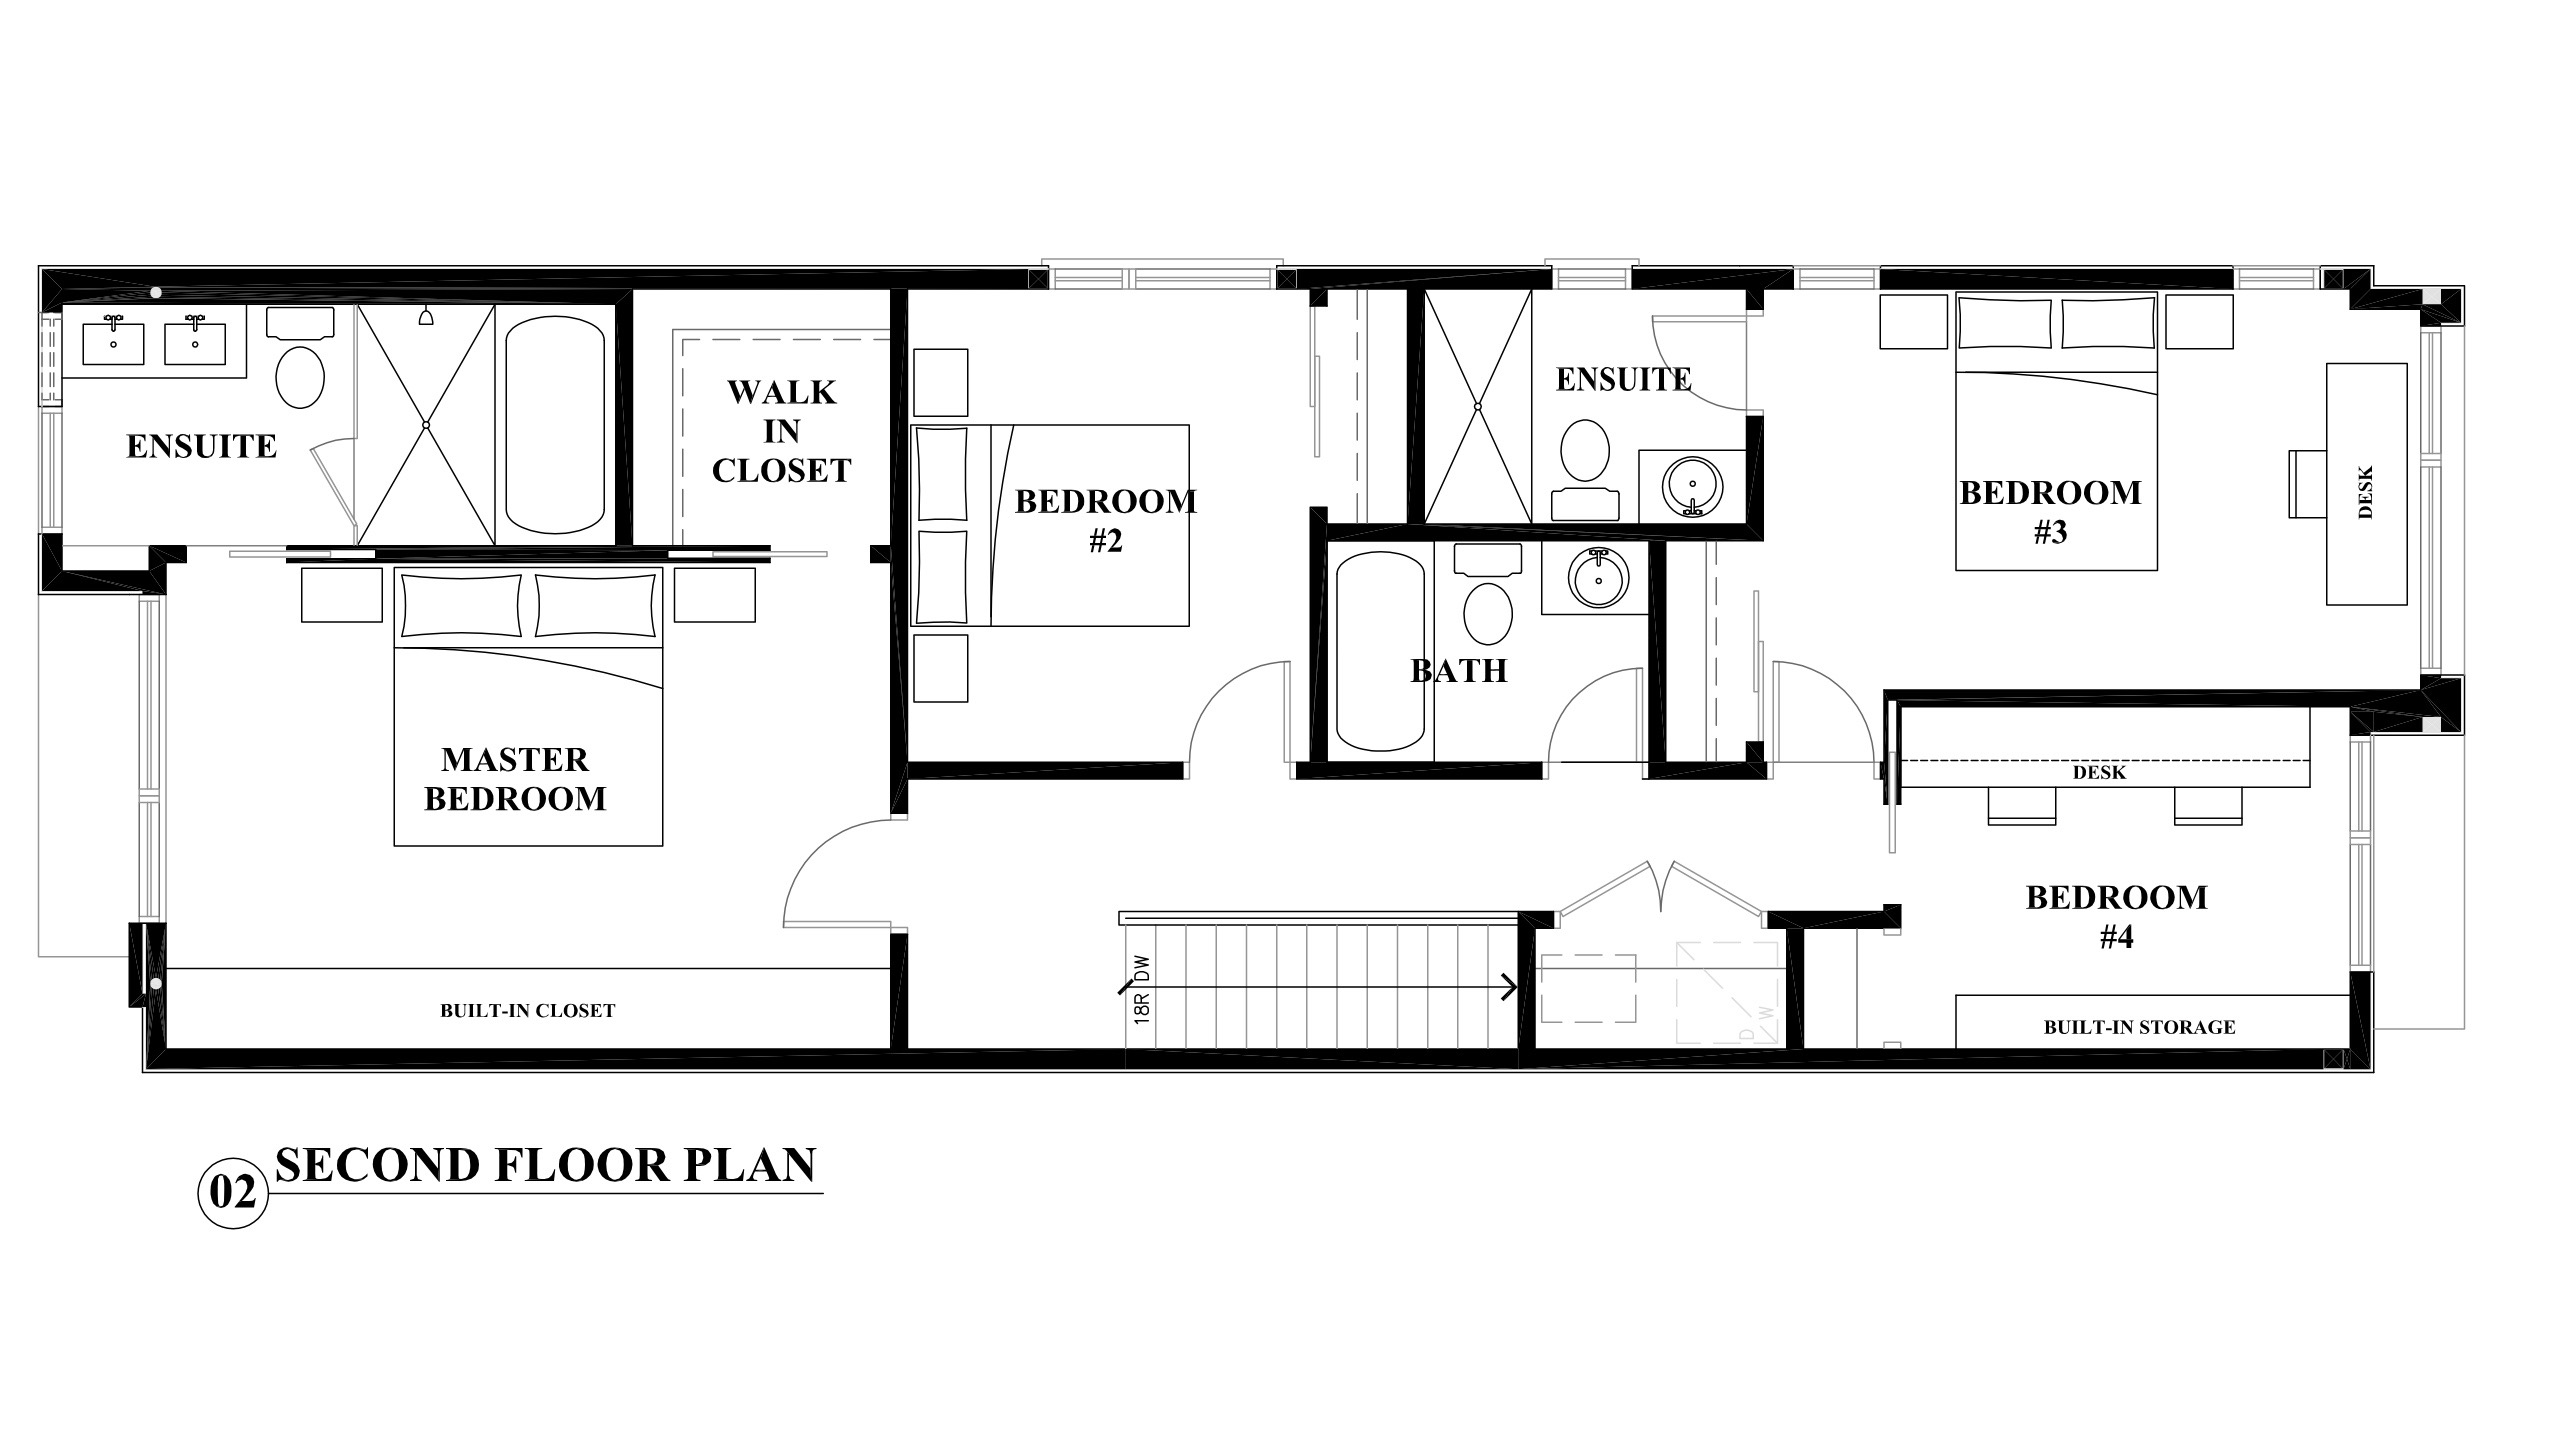 Second Floor Plan An Interior Design Perspective on